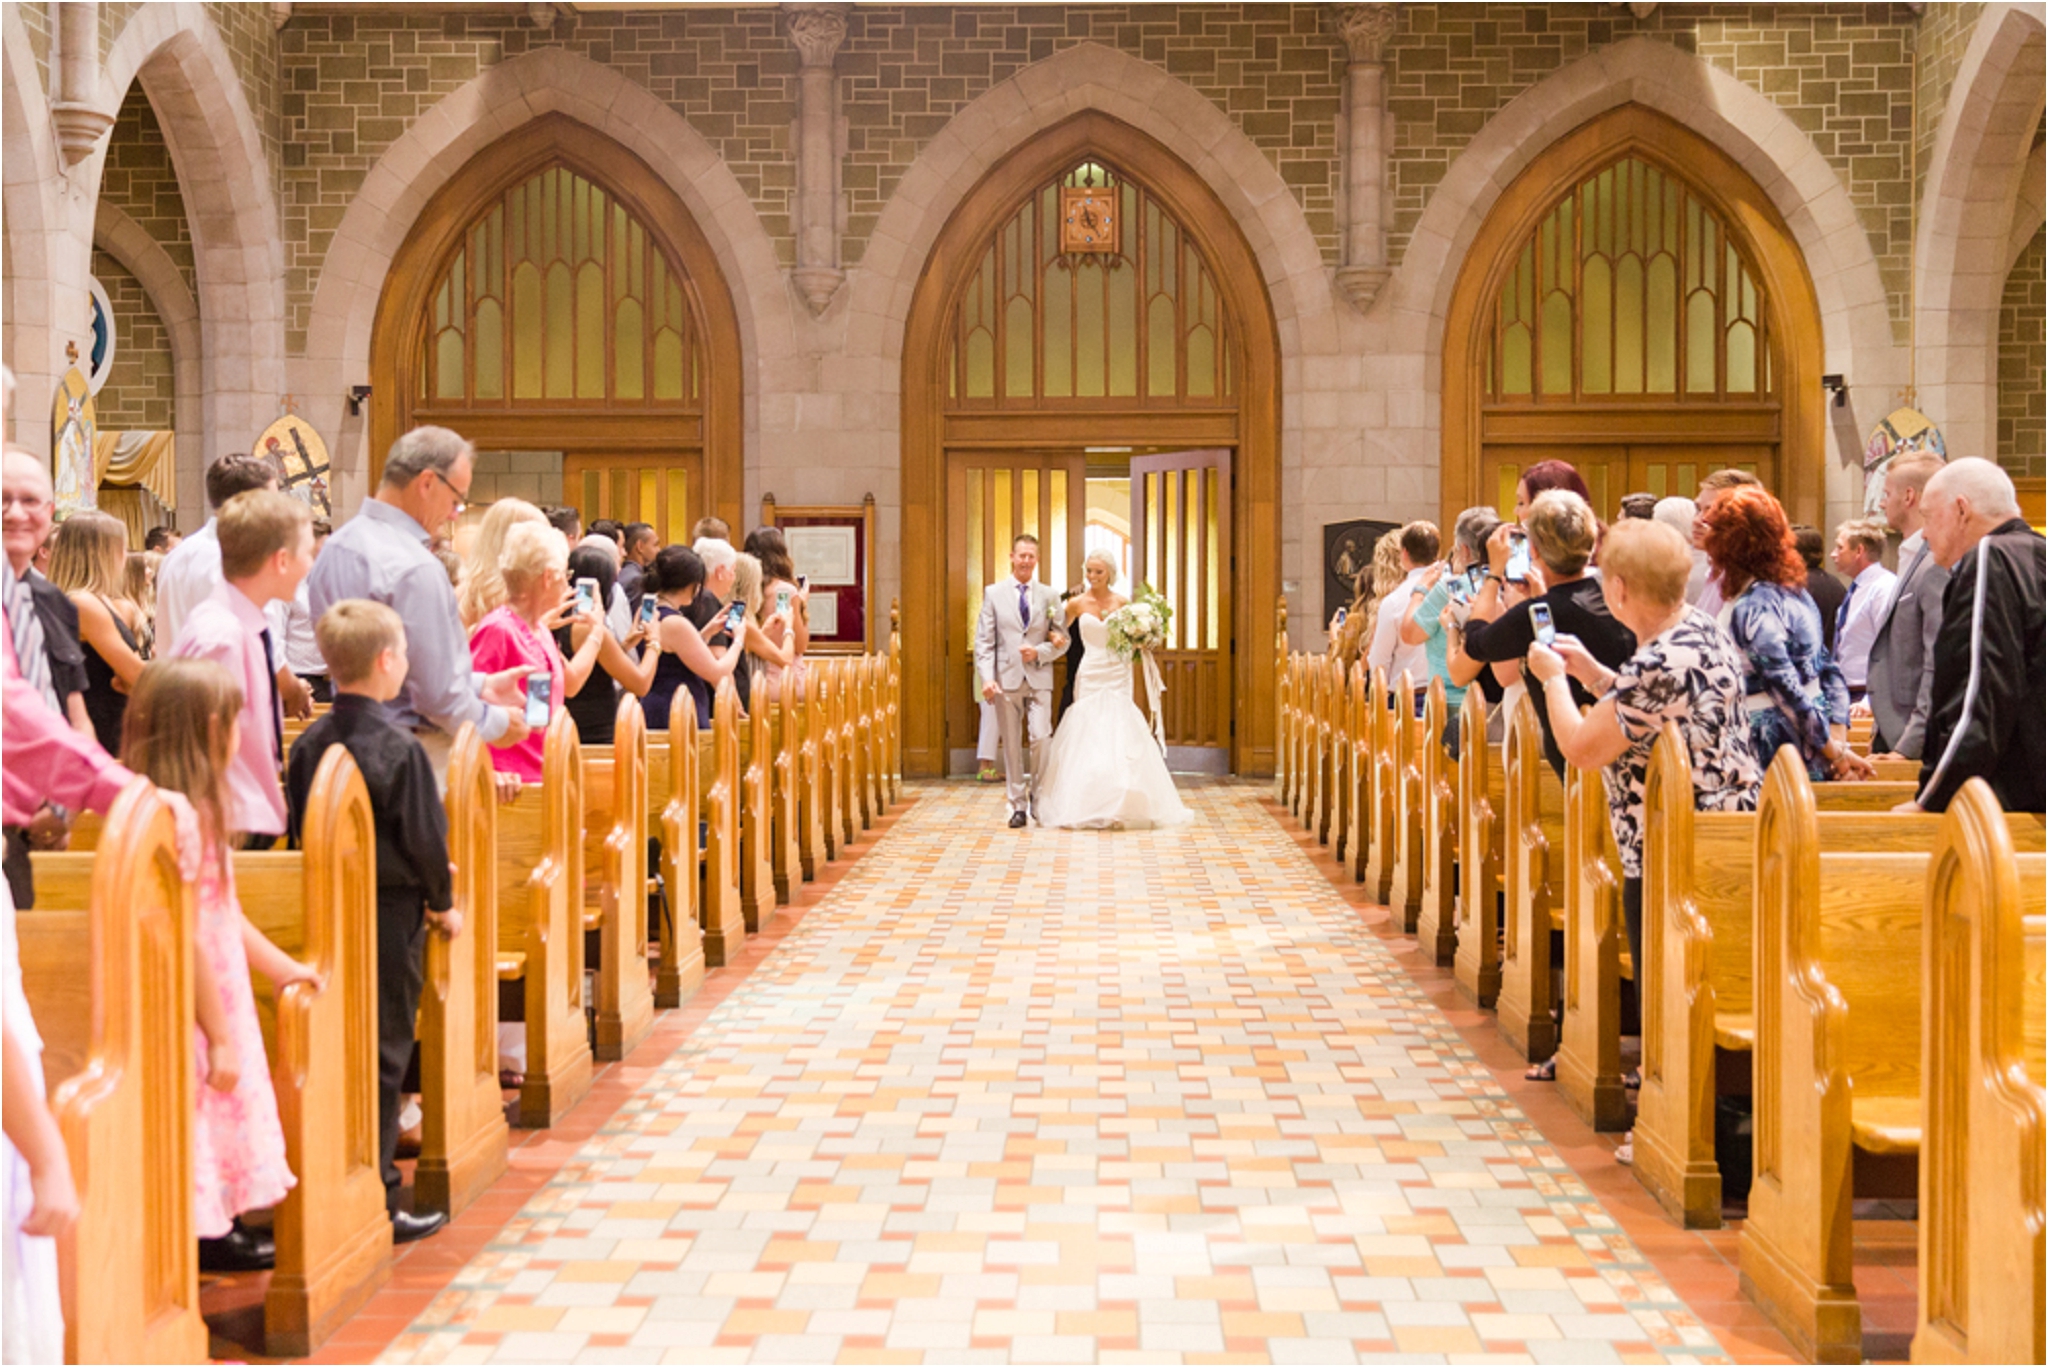 St. Joseph's Basilica, Edmonton wedding photos